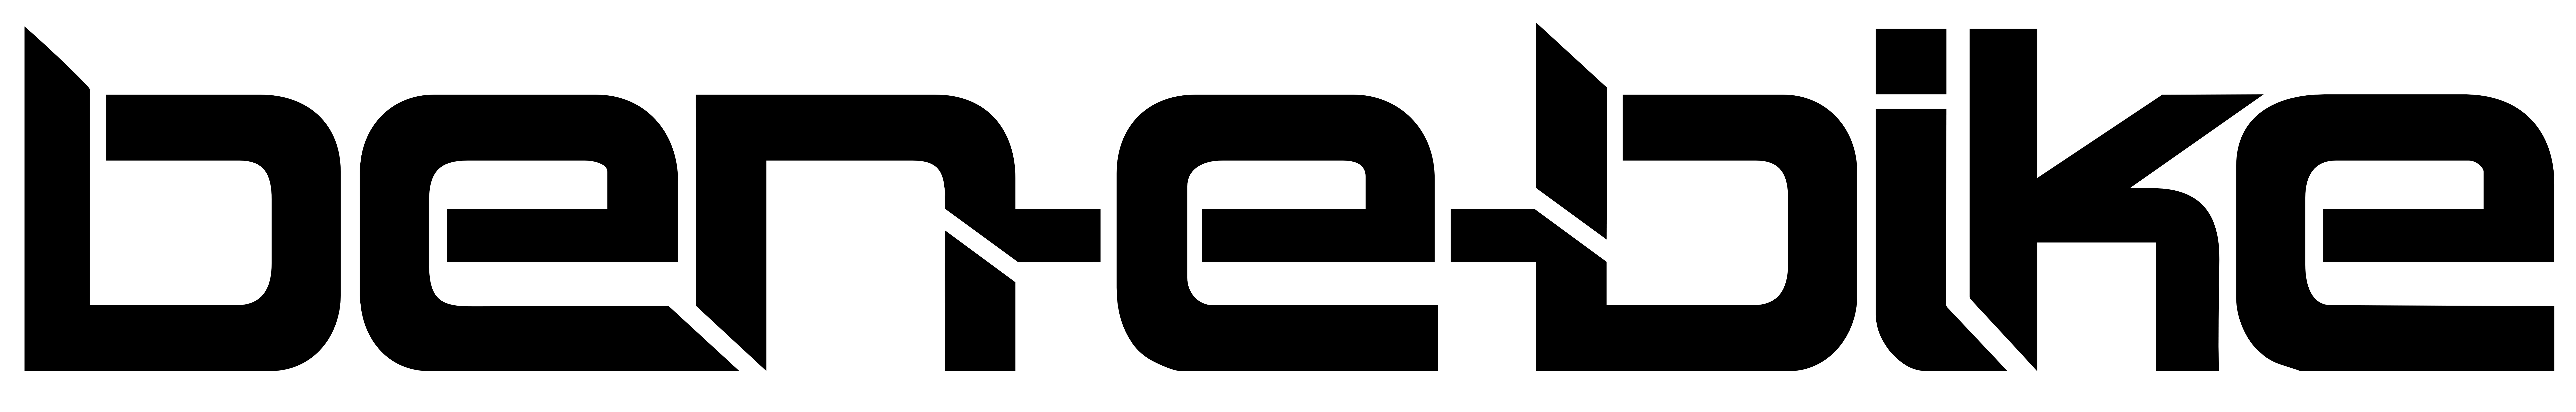 Beb Logo High Res